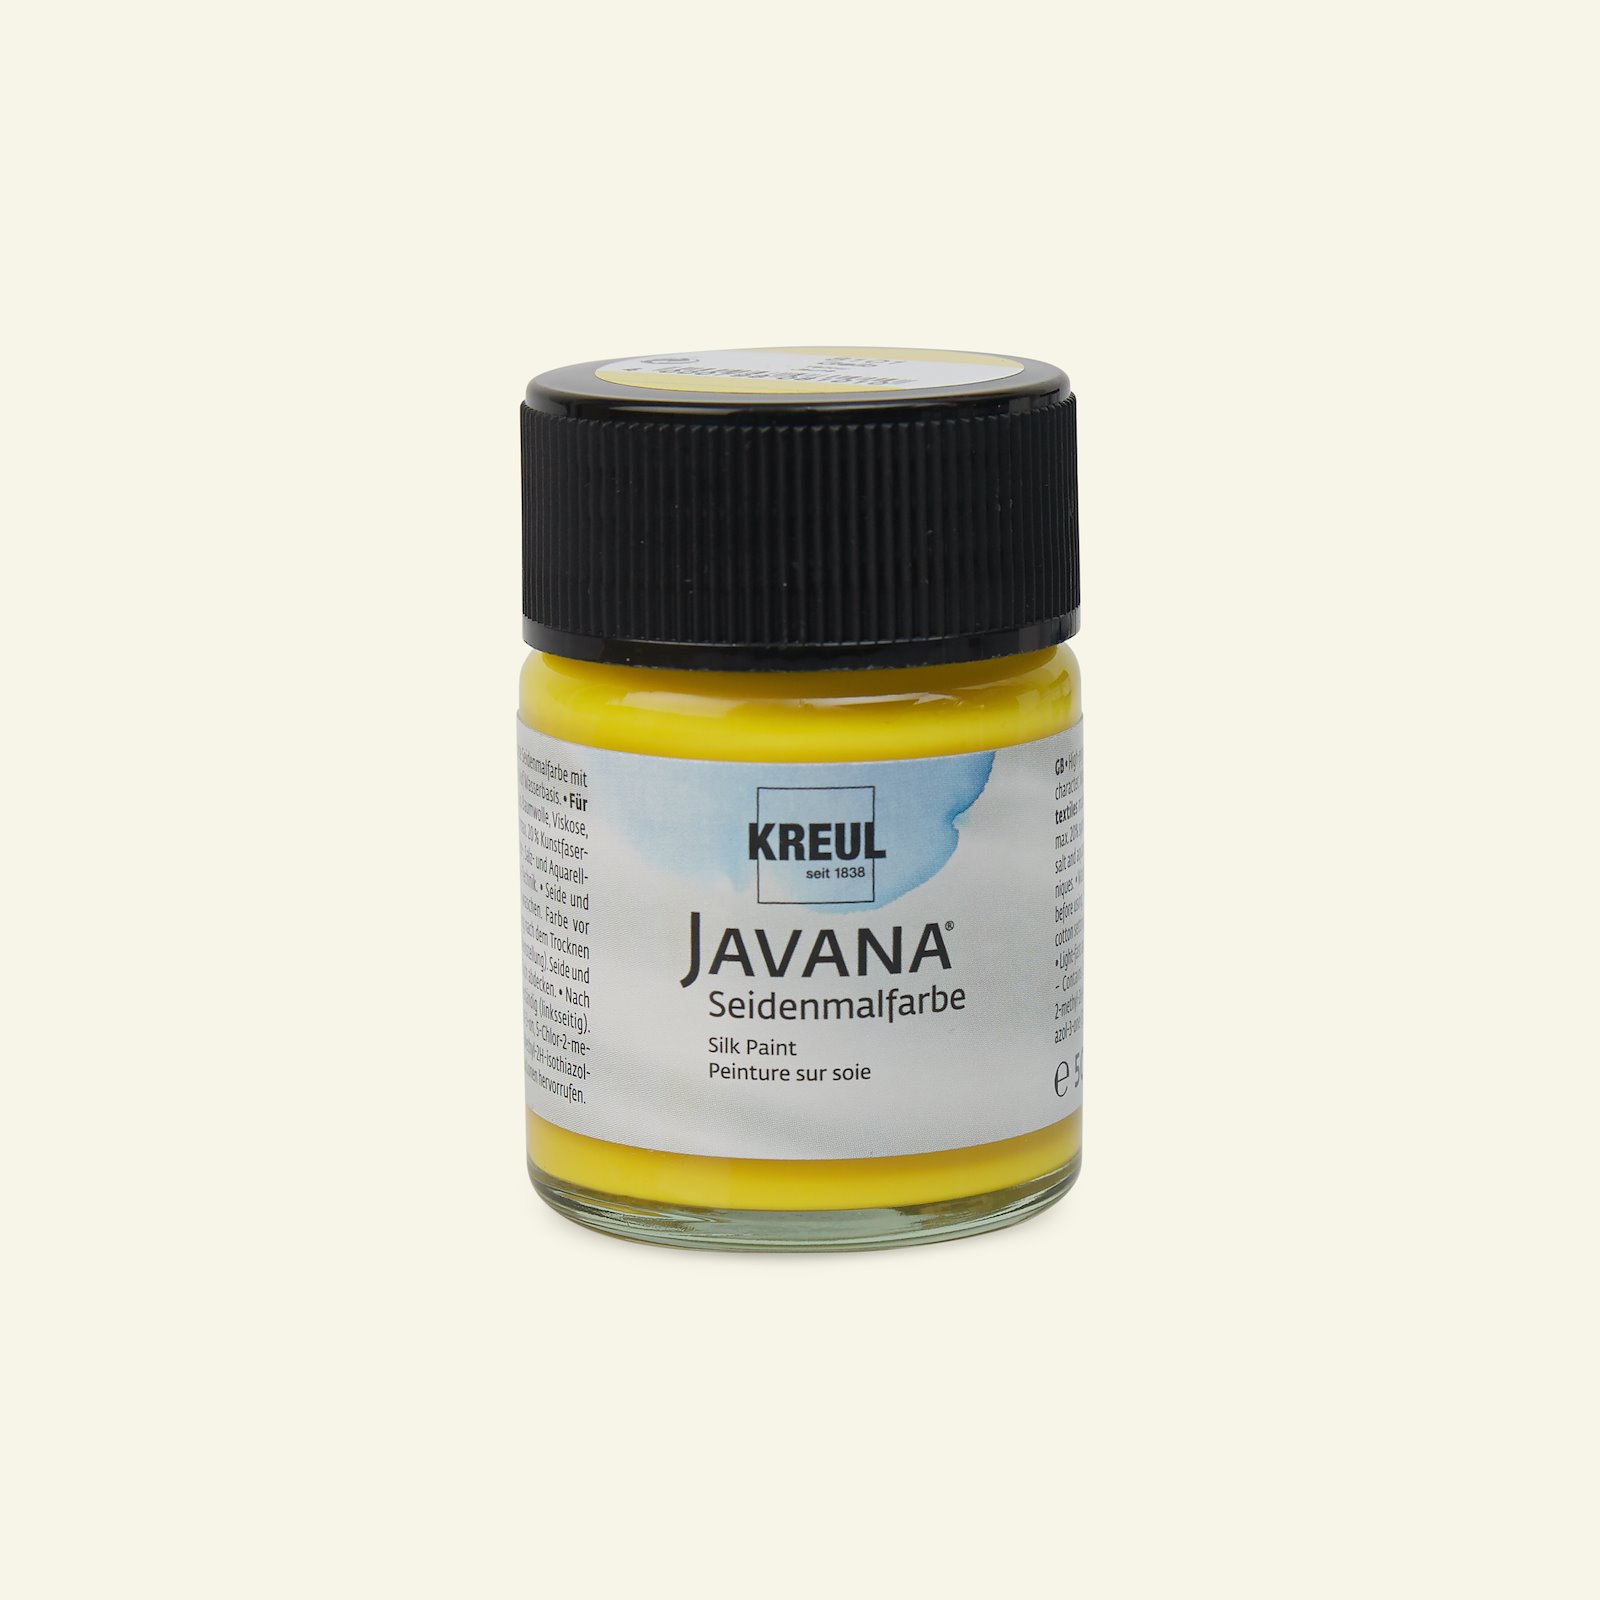 Javana sidenfärg, gul, 50ml 29635_pack_b